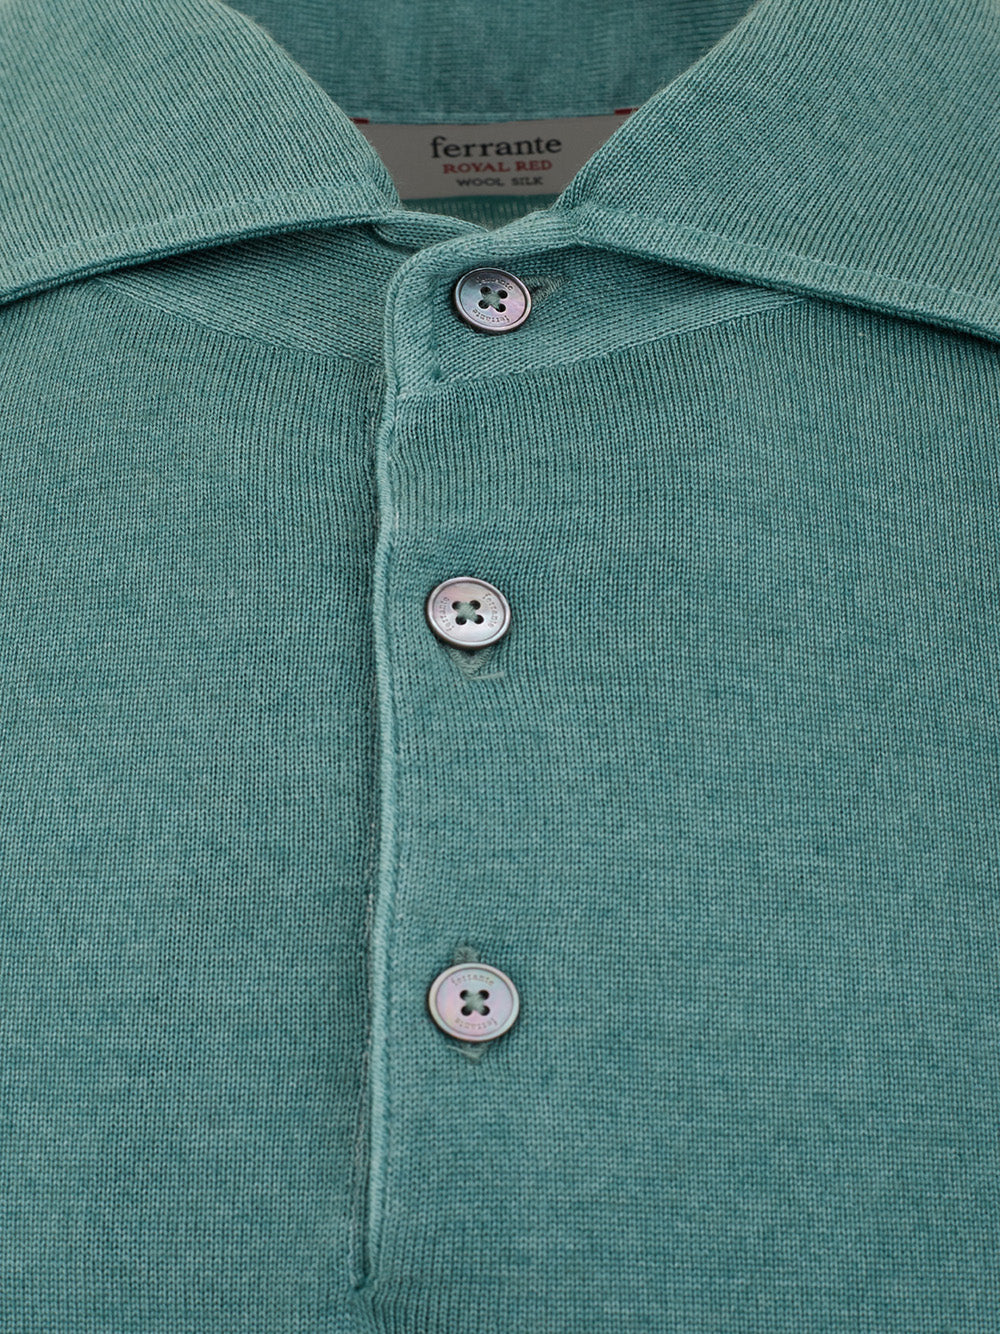 FERRANTE Wool and Silk Long Sleeves Polo Shirt